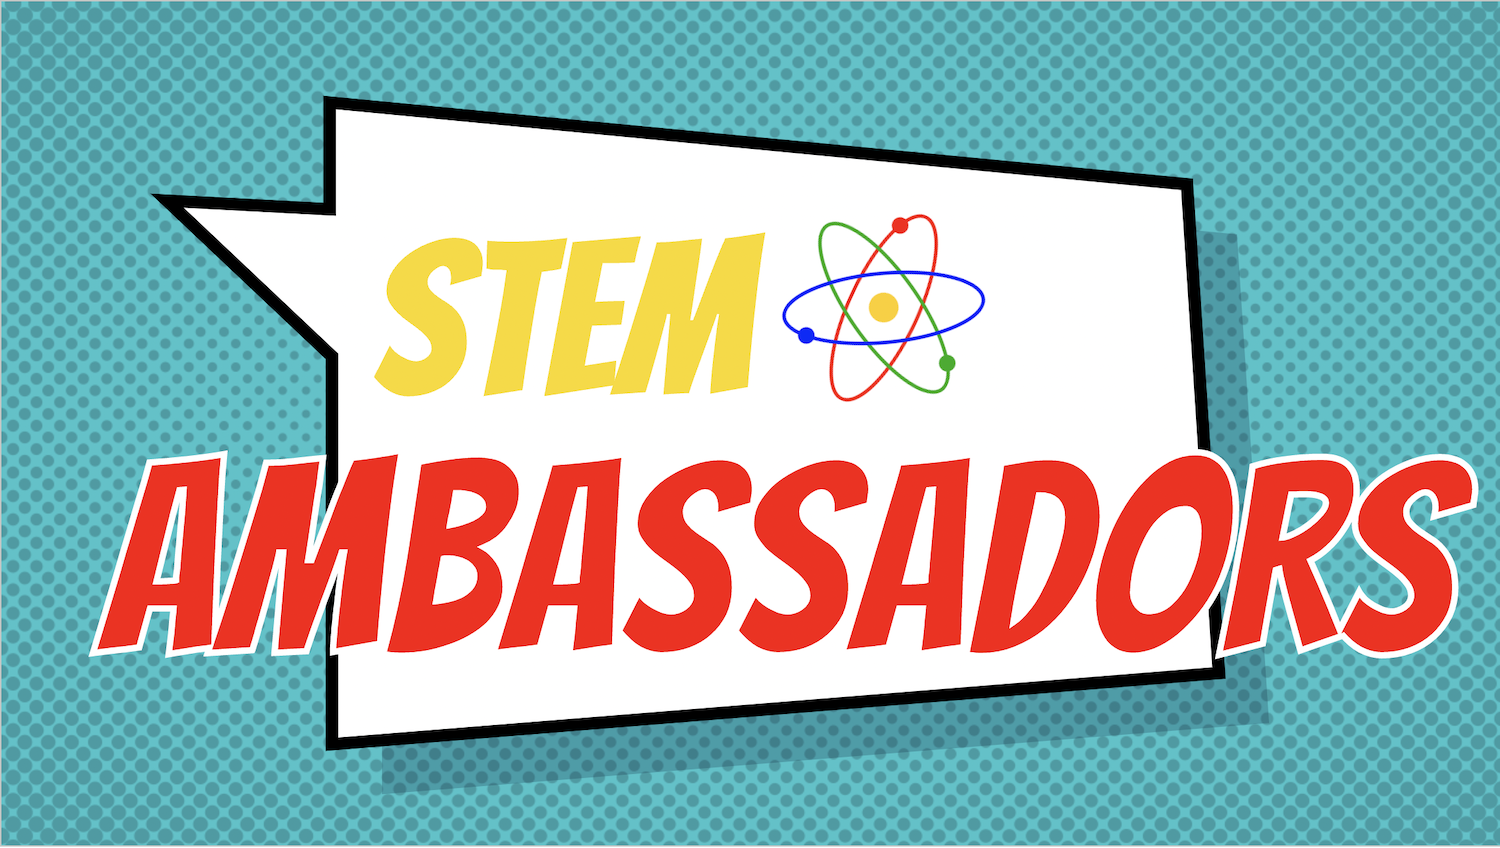 STEM Ambassadors